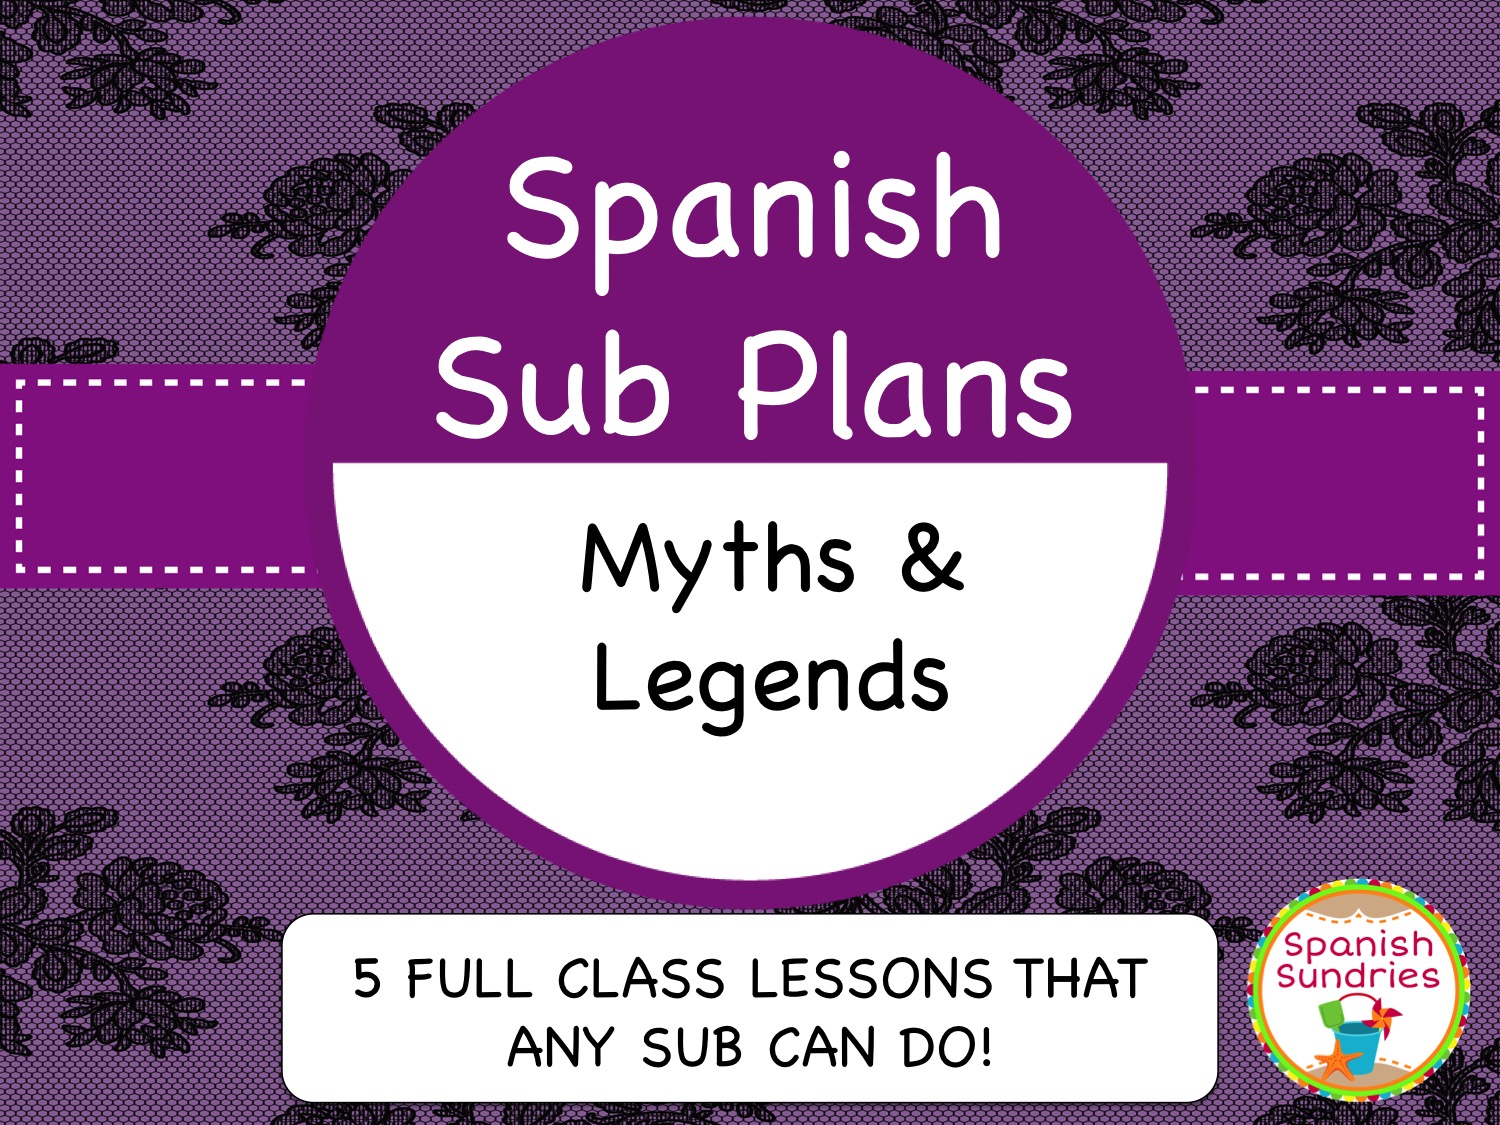 Spanish Sub Plans - Hispanic Myths & Legends